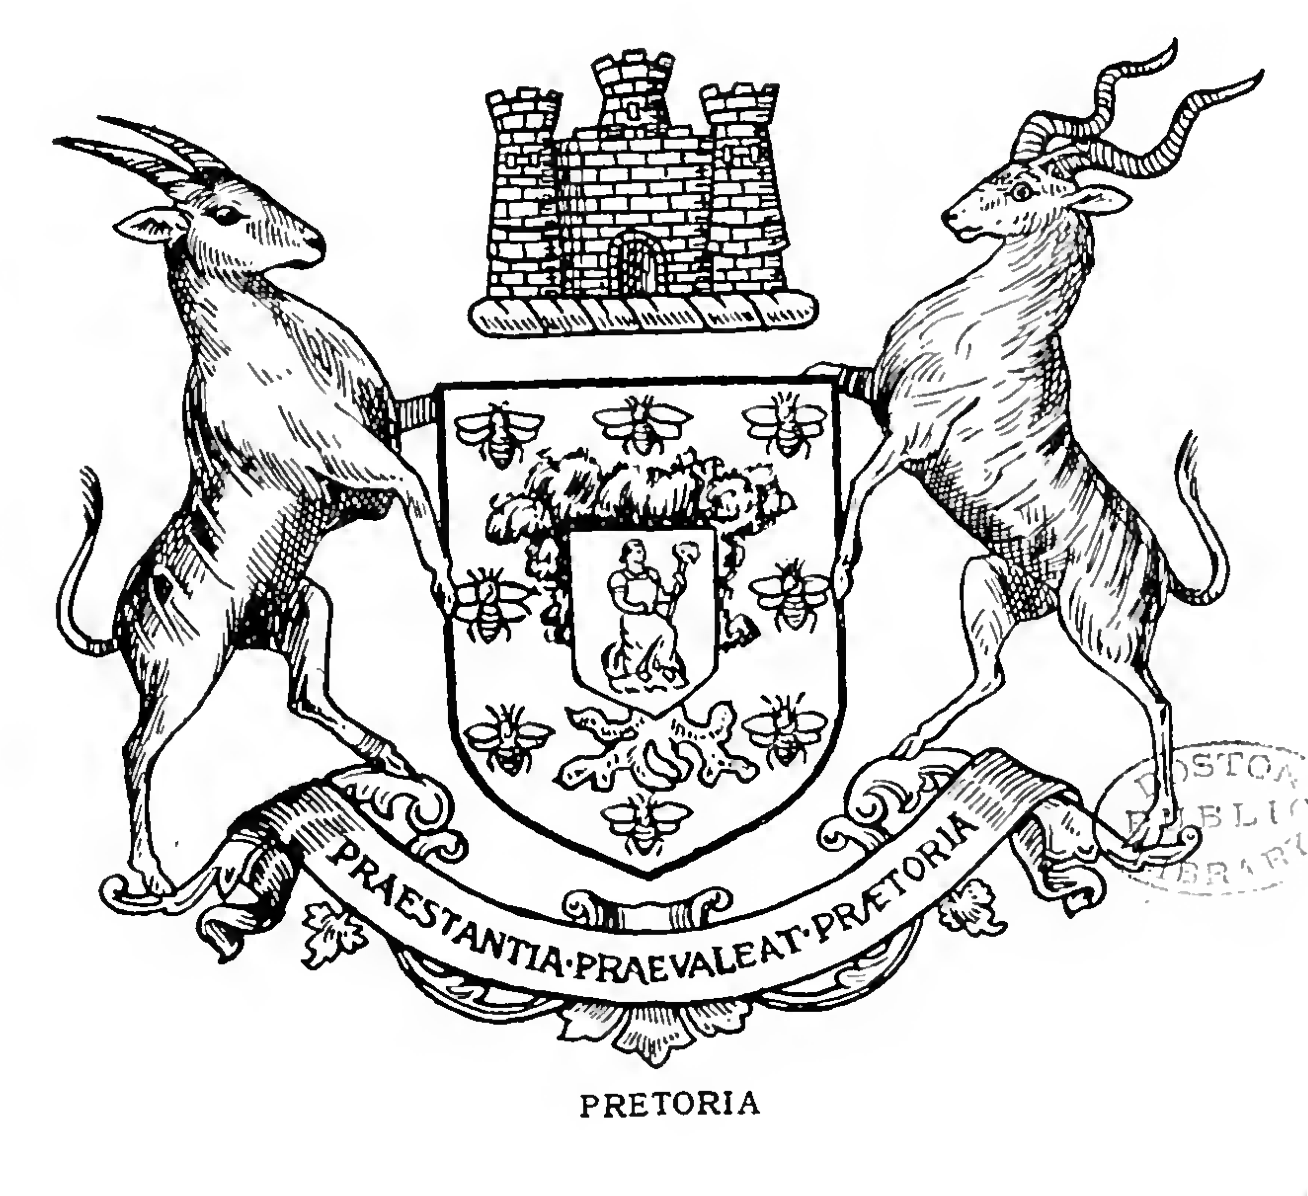 PRETORIA, Municipality of (Transvaal, South Africa).